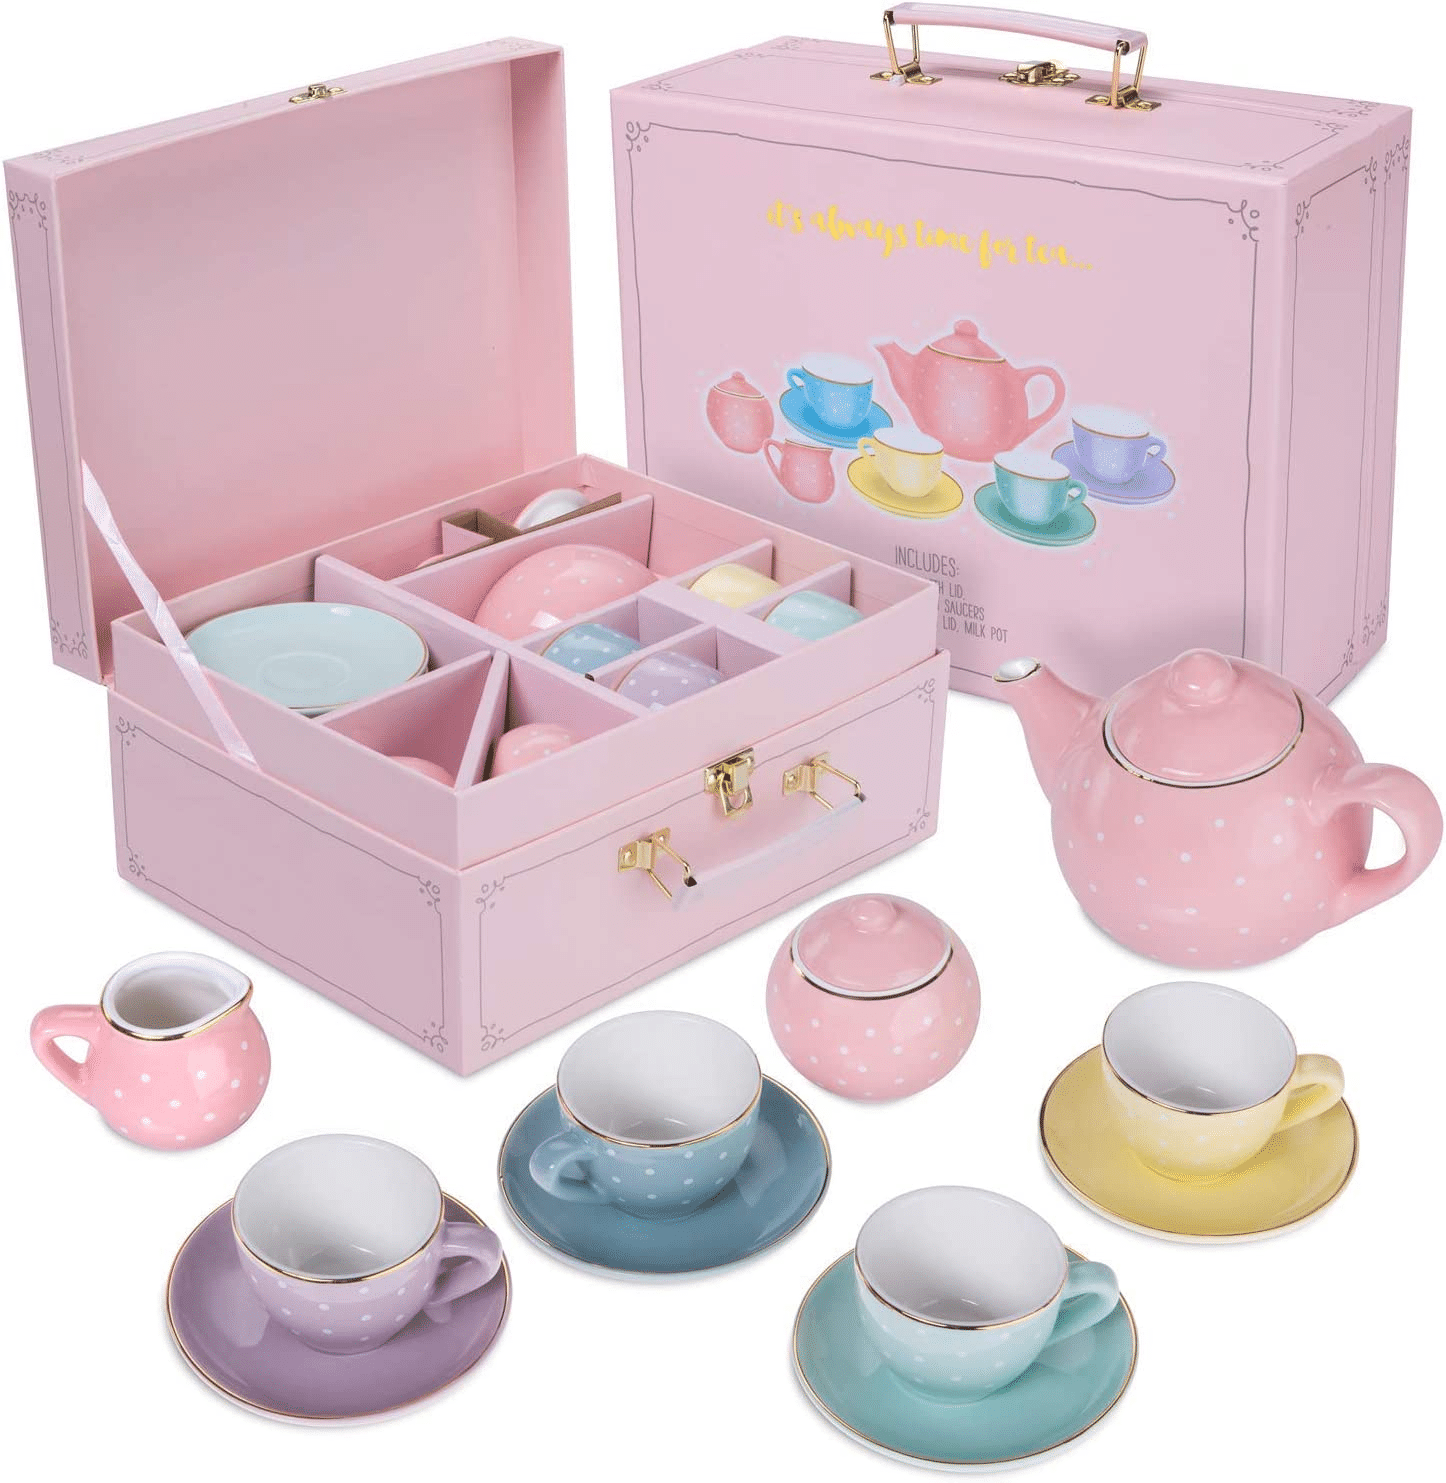 Jewelkeeper Porcelain Tea Set, $49.99